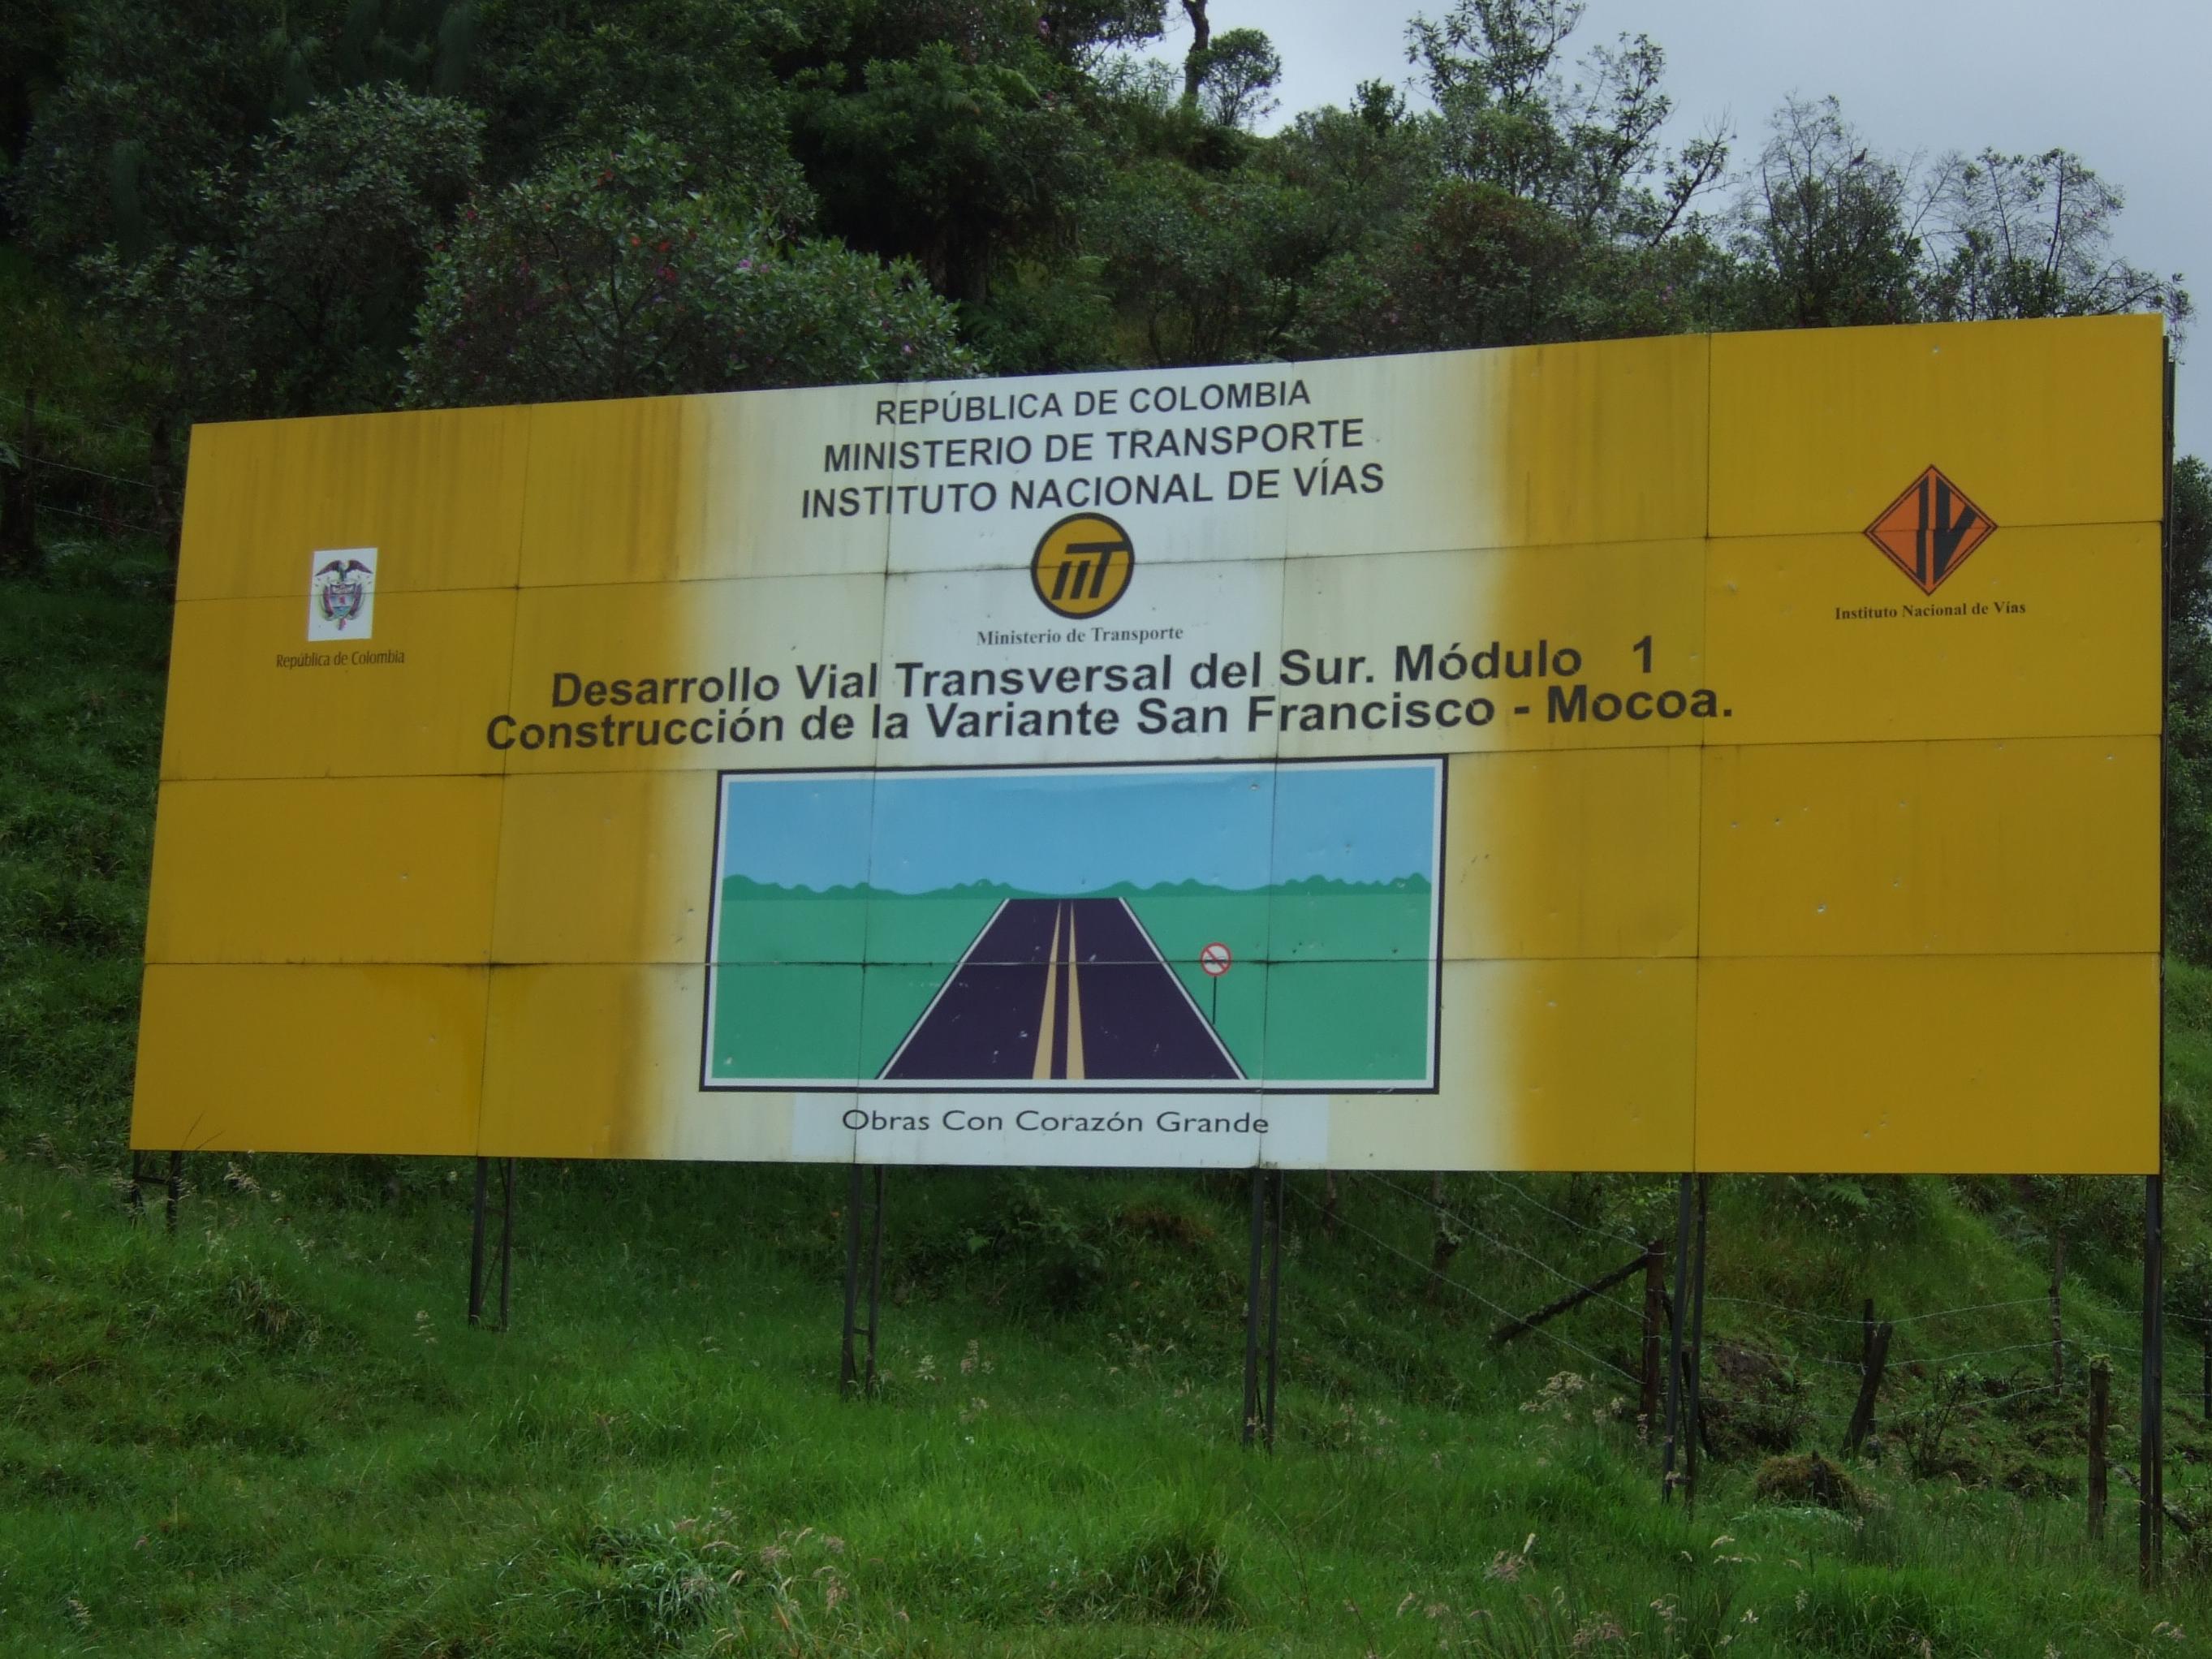 A sign announces the construction project